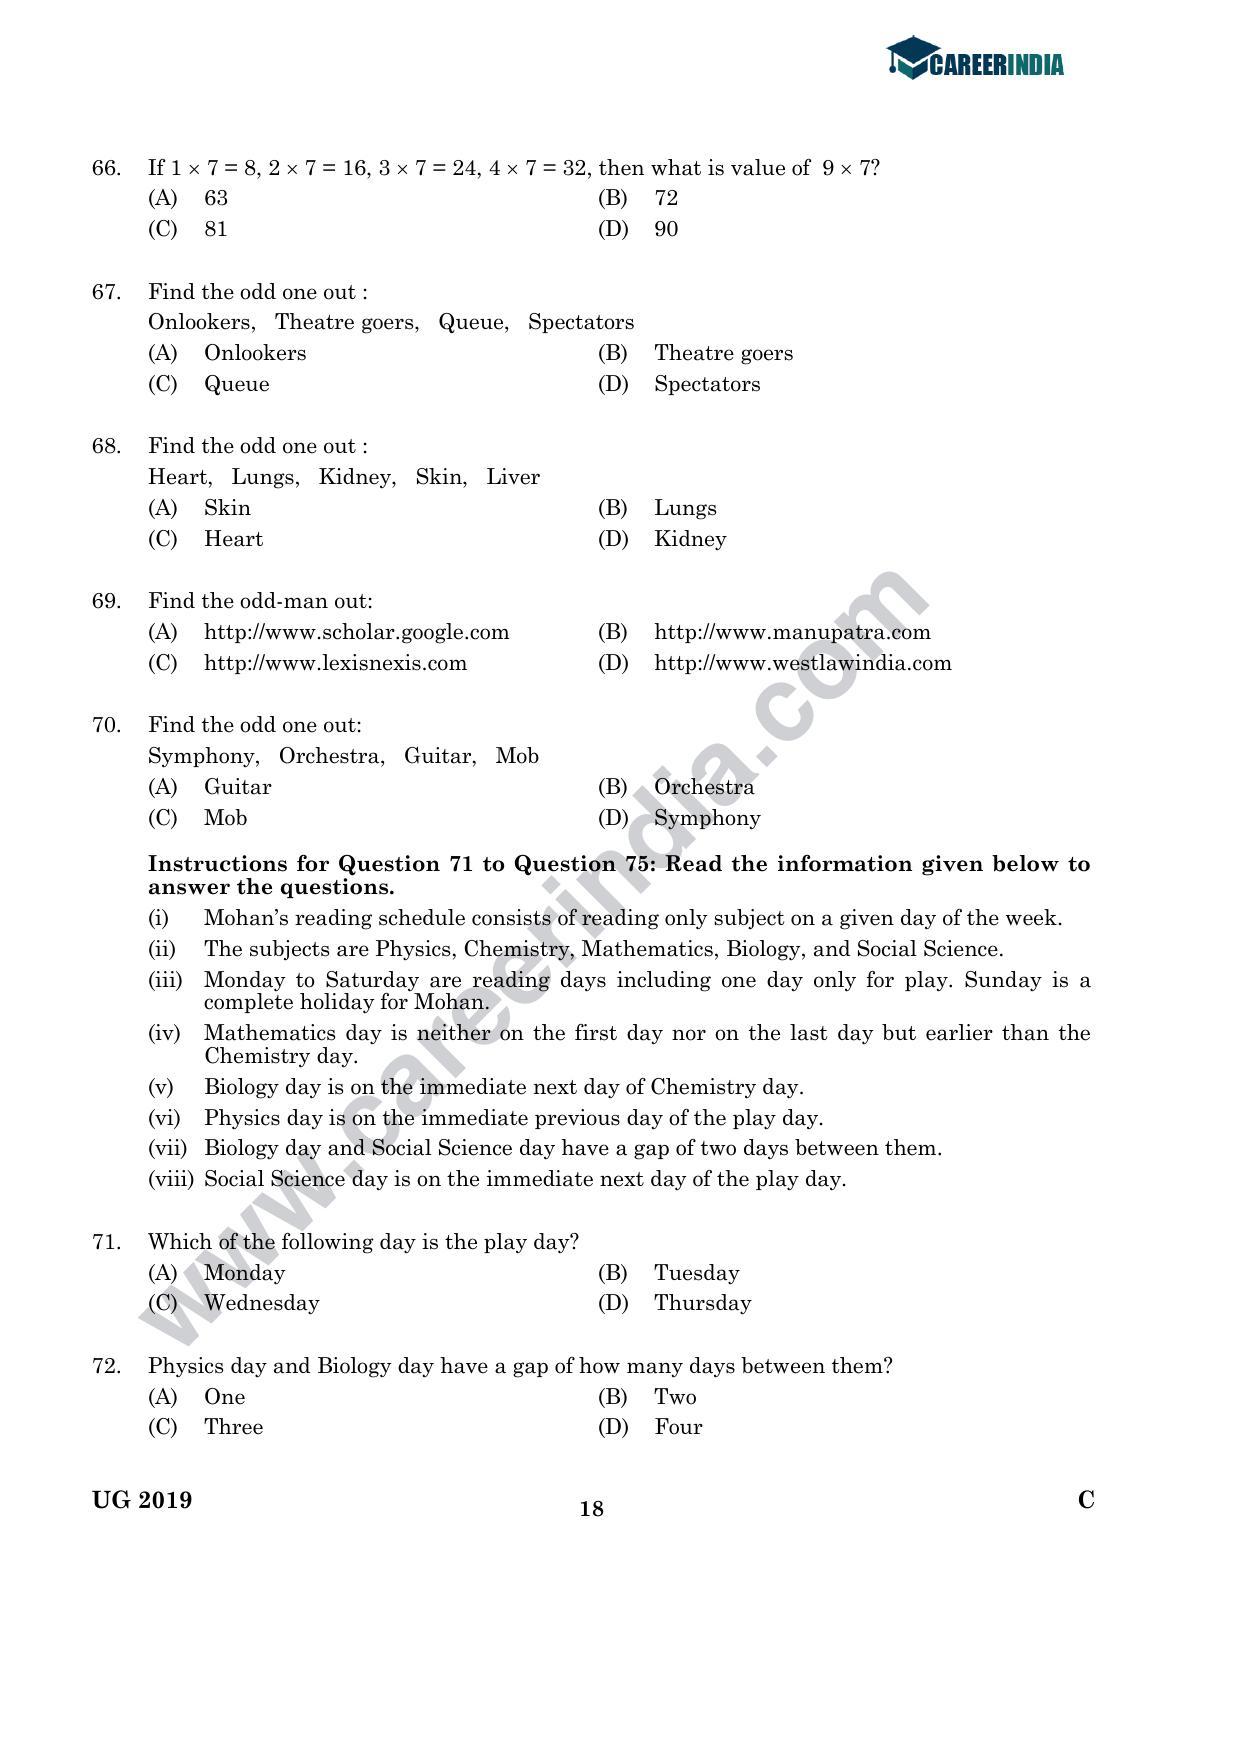 CLAT 2019 UG Legal-Aptitude Question Paper - Page 17